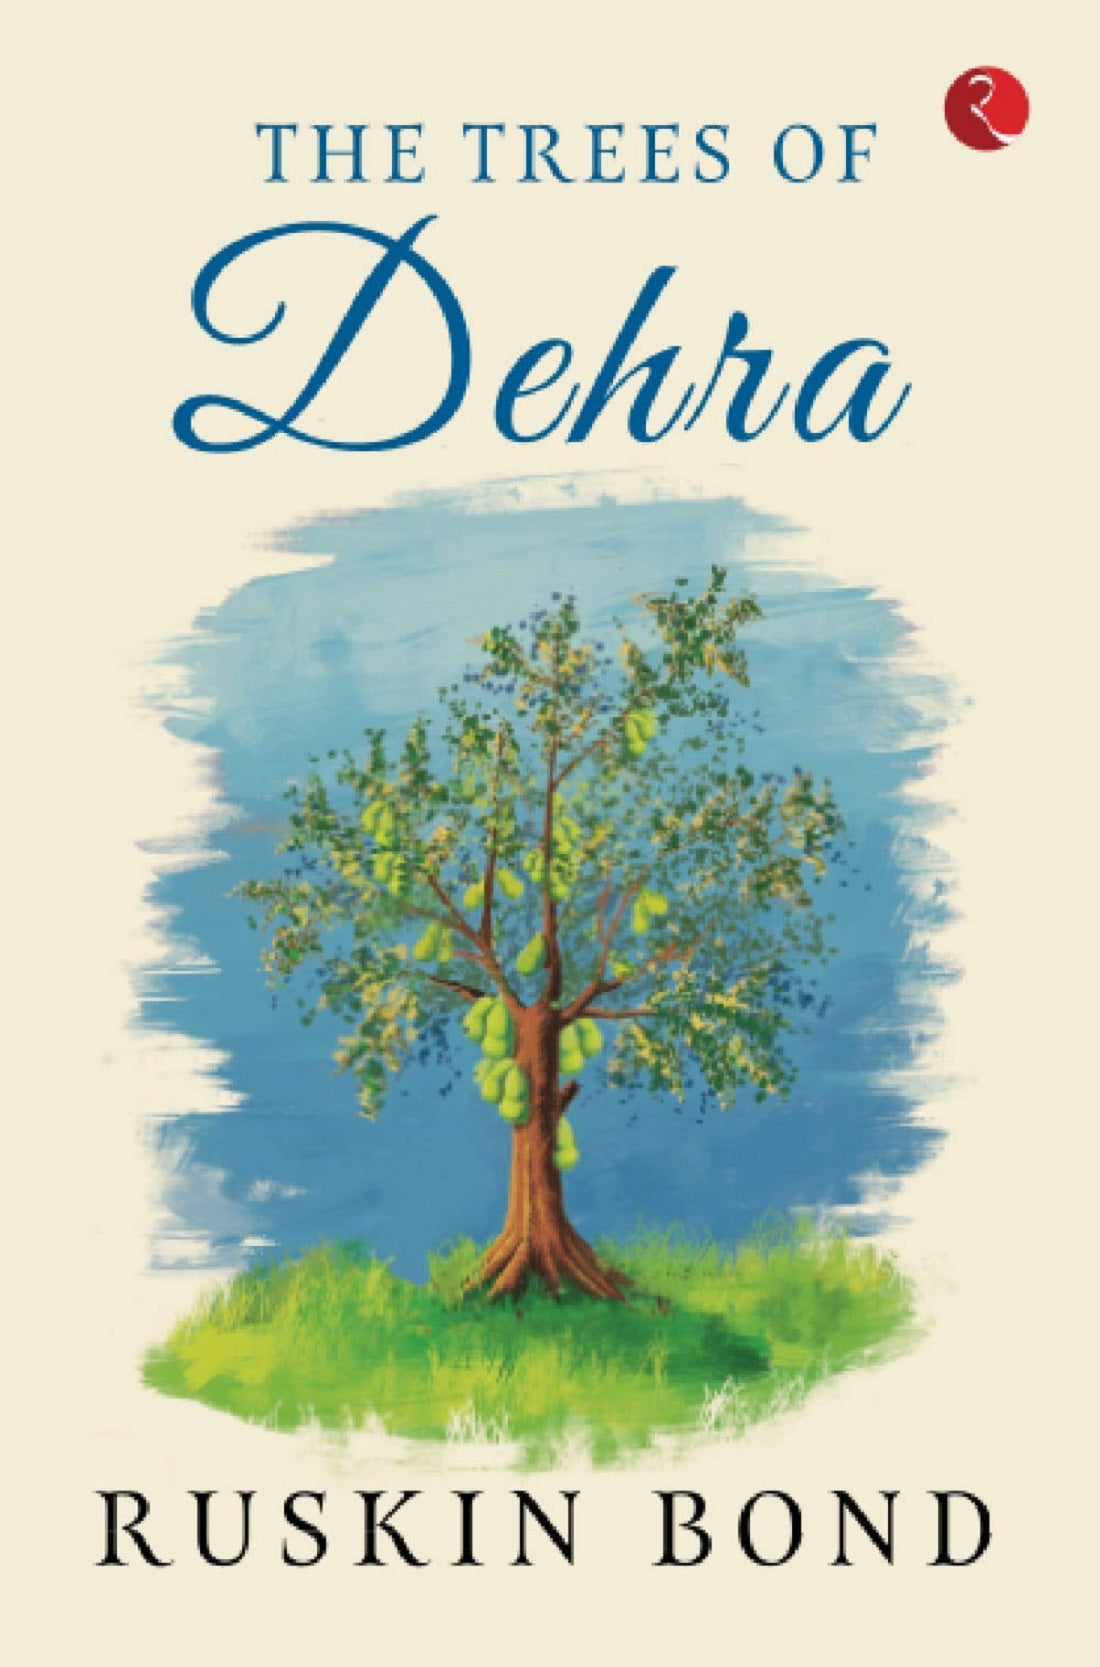 THE TREES OF DEHRA